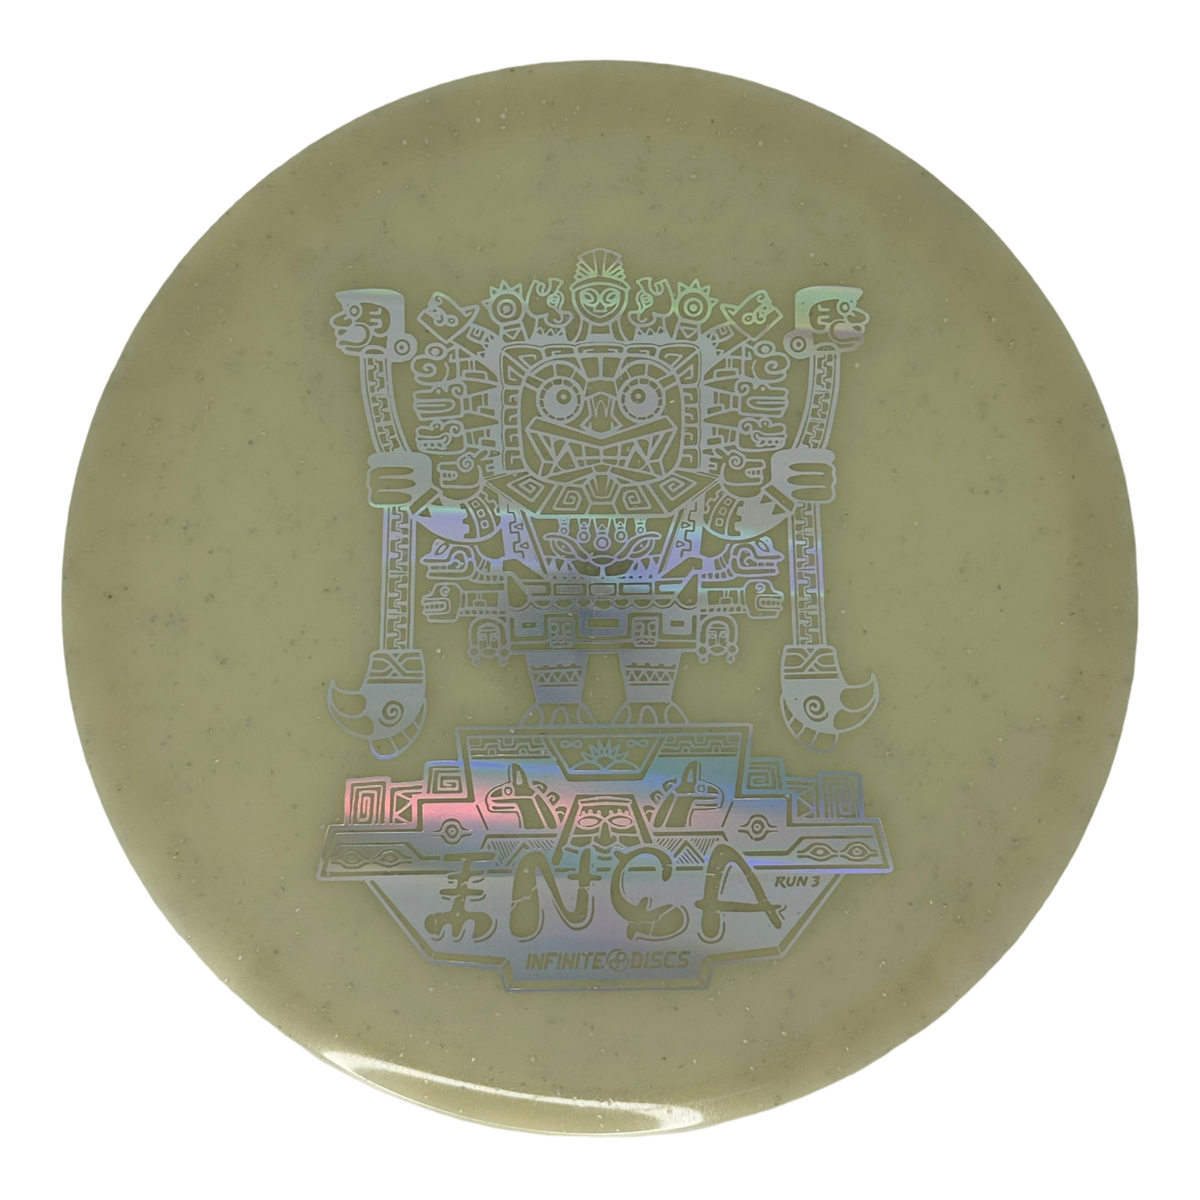 Infinite Discs Metal Flake Glow C-Blend Inca